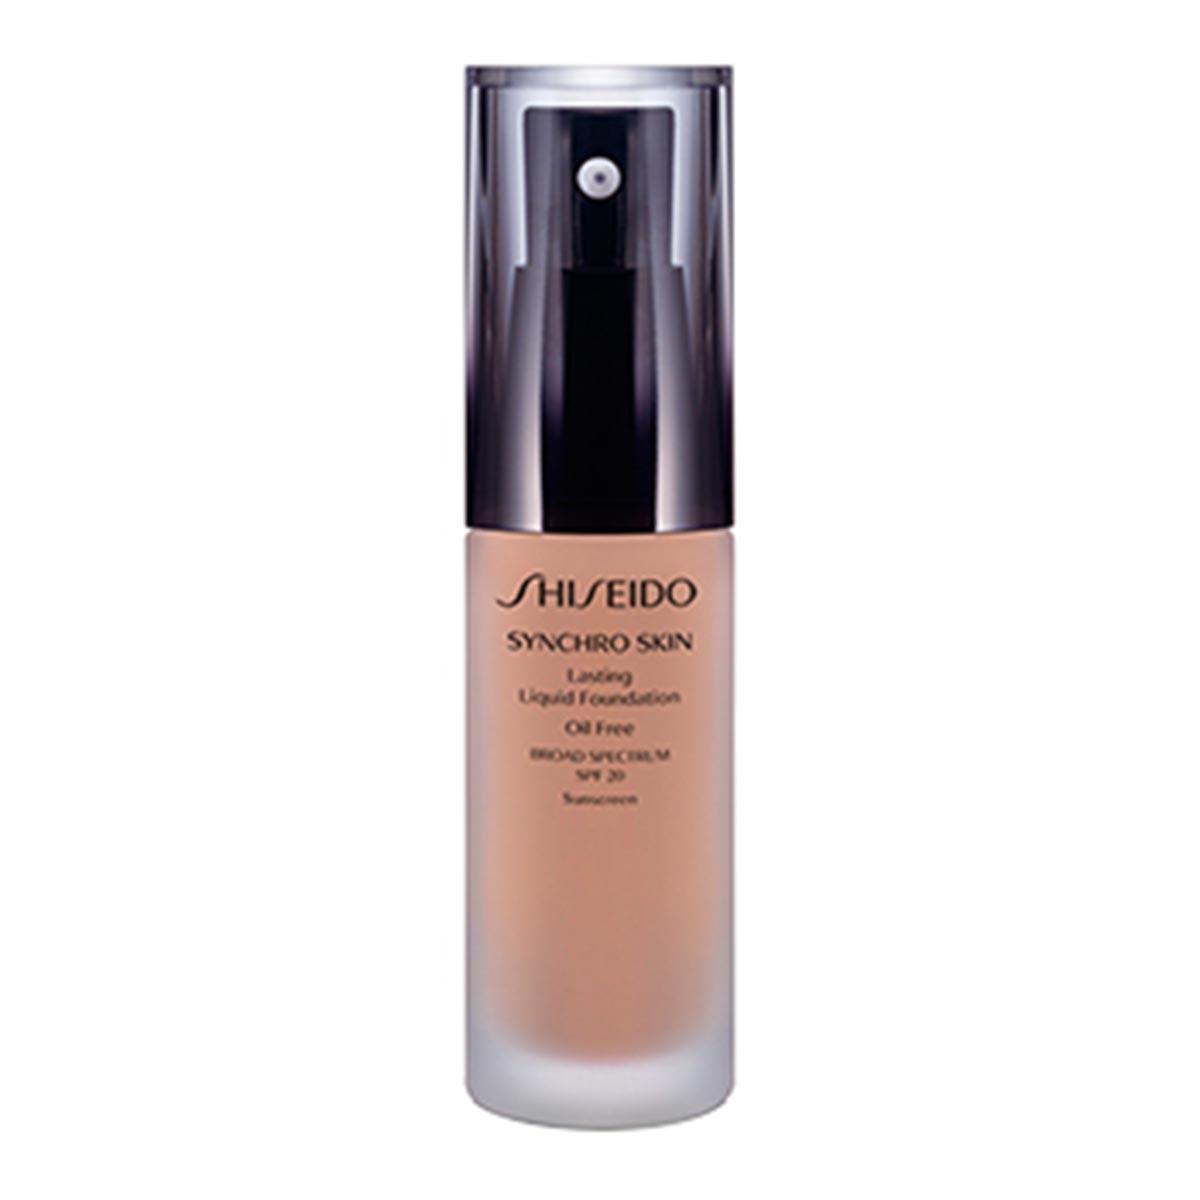 shiseido-synchro-skin-lasting-liquid-foundation-r3-b40-30ml